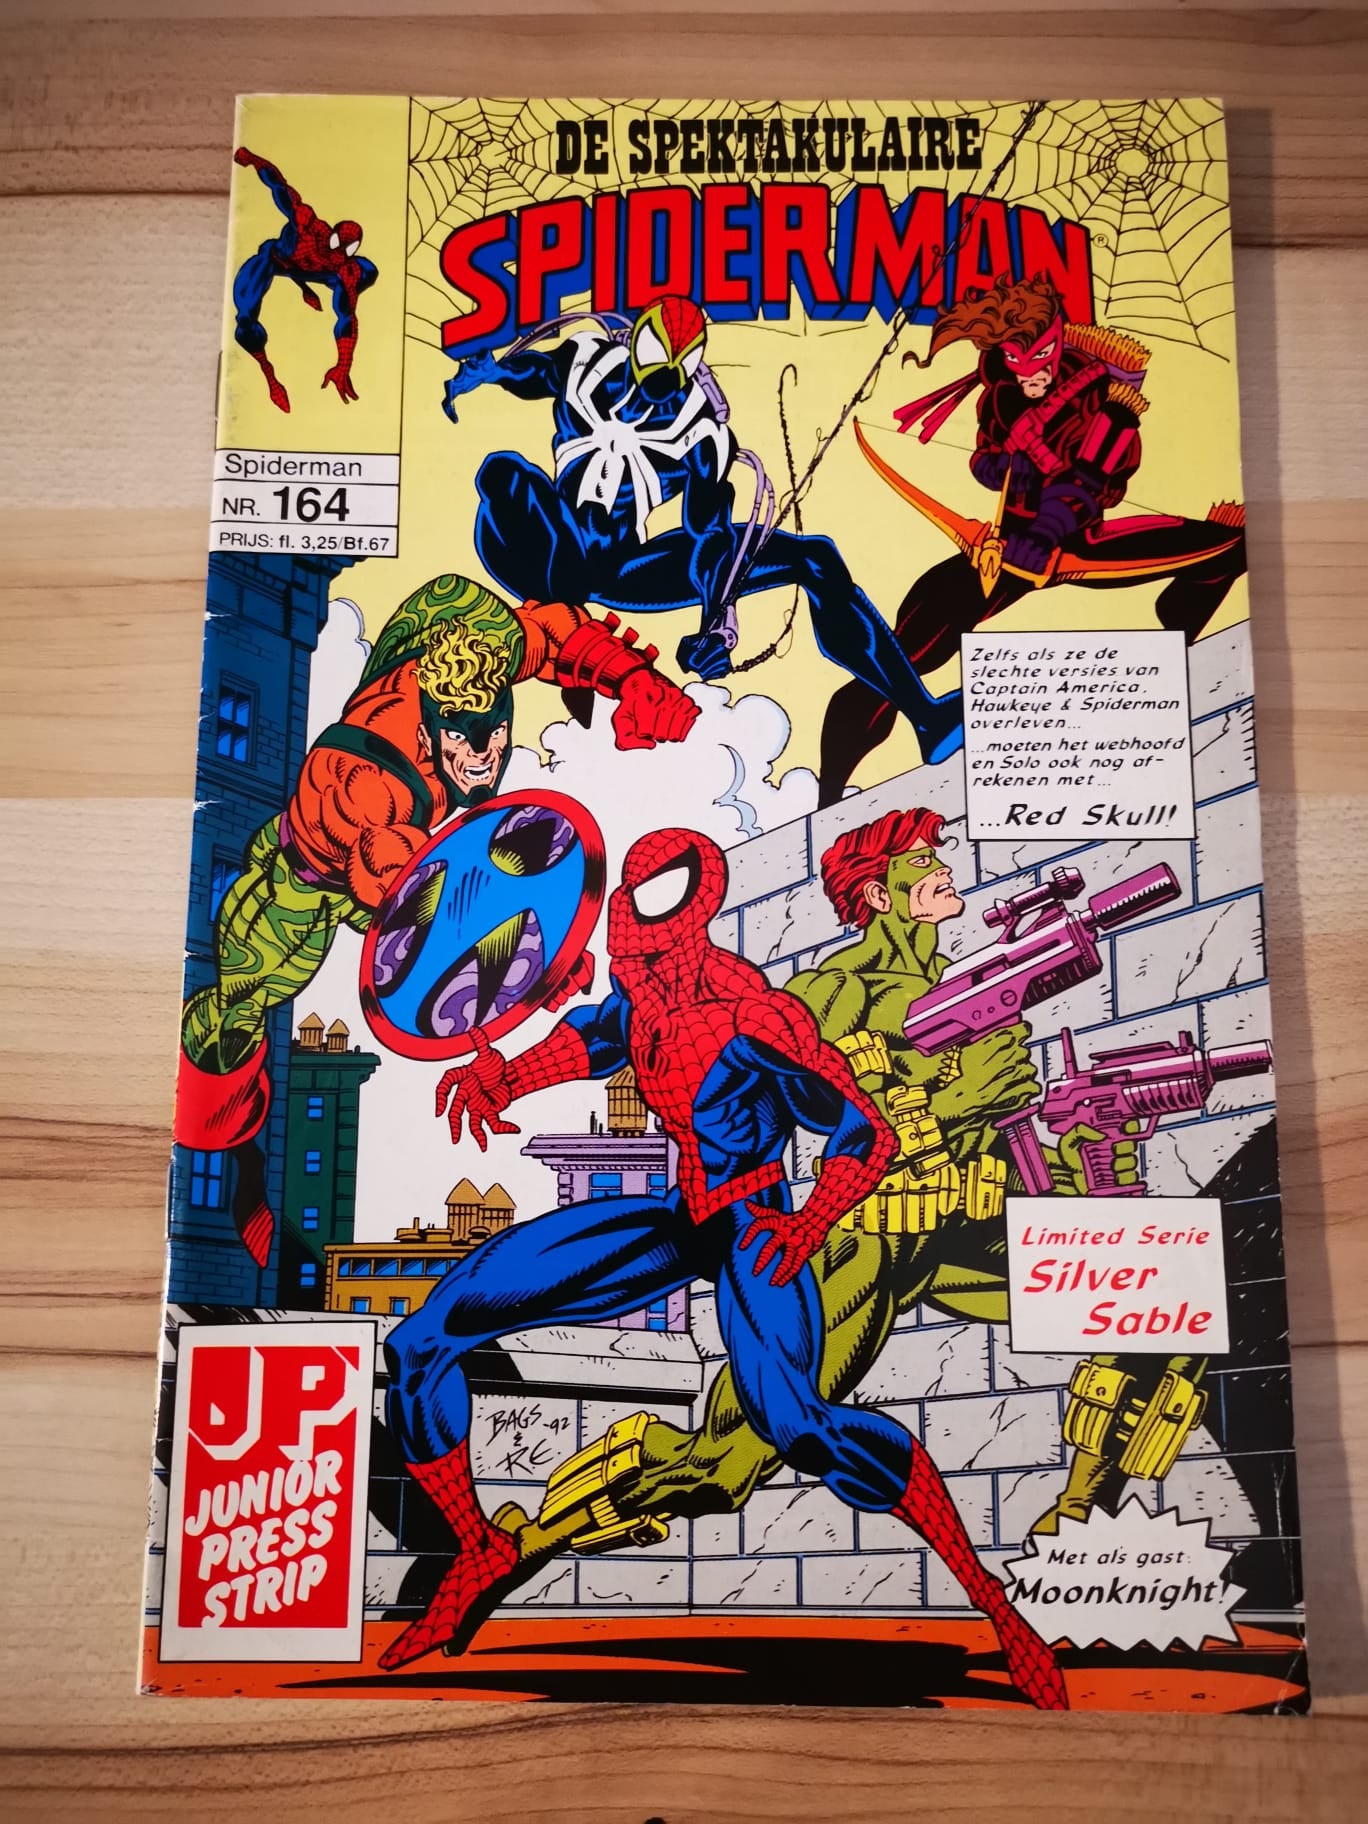 De spektakulaire spiderman #164